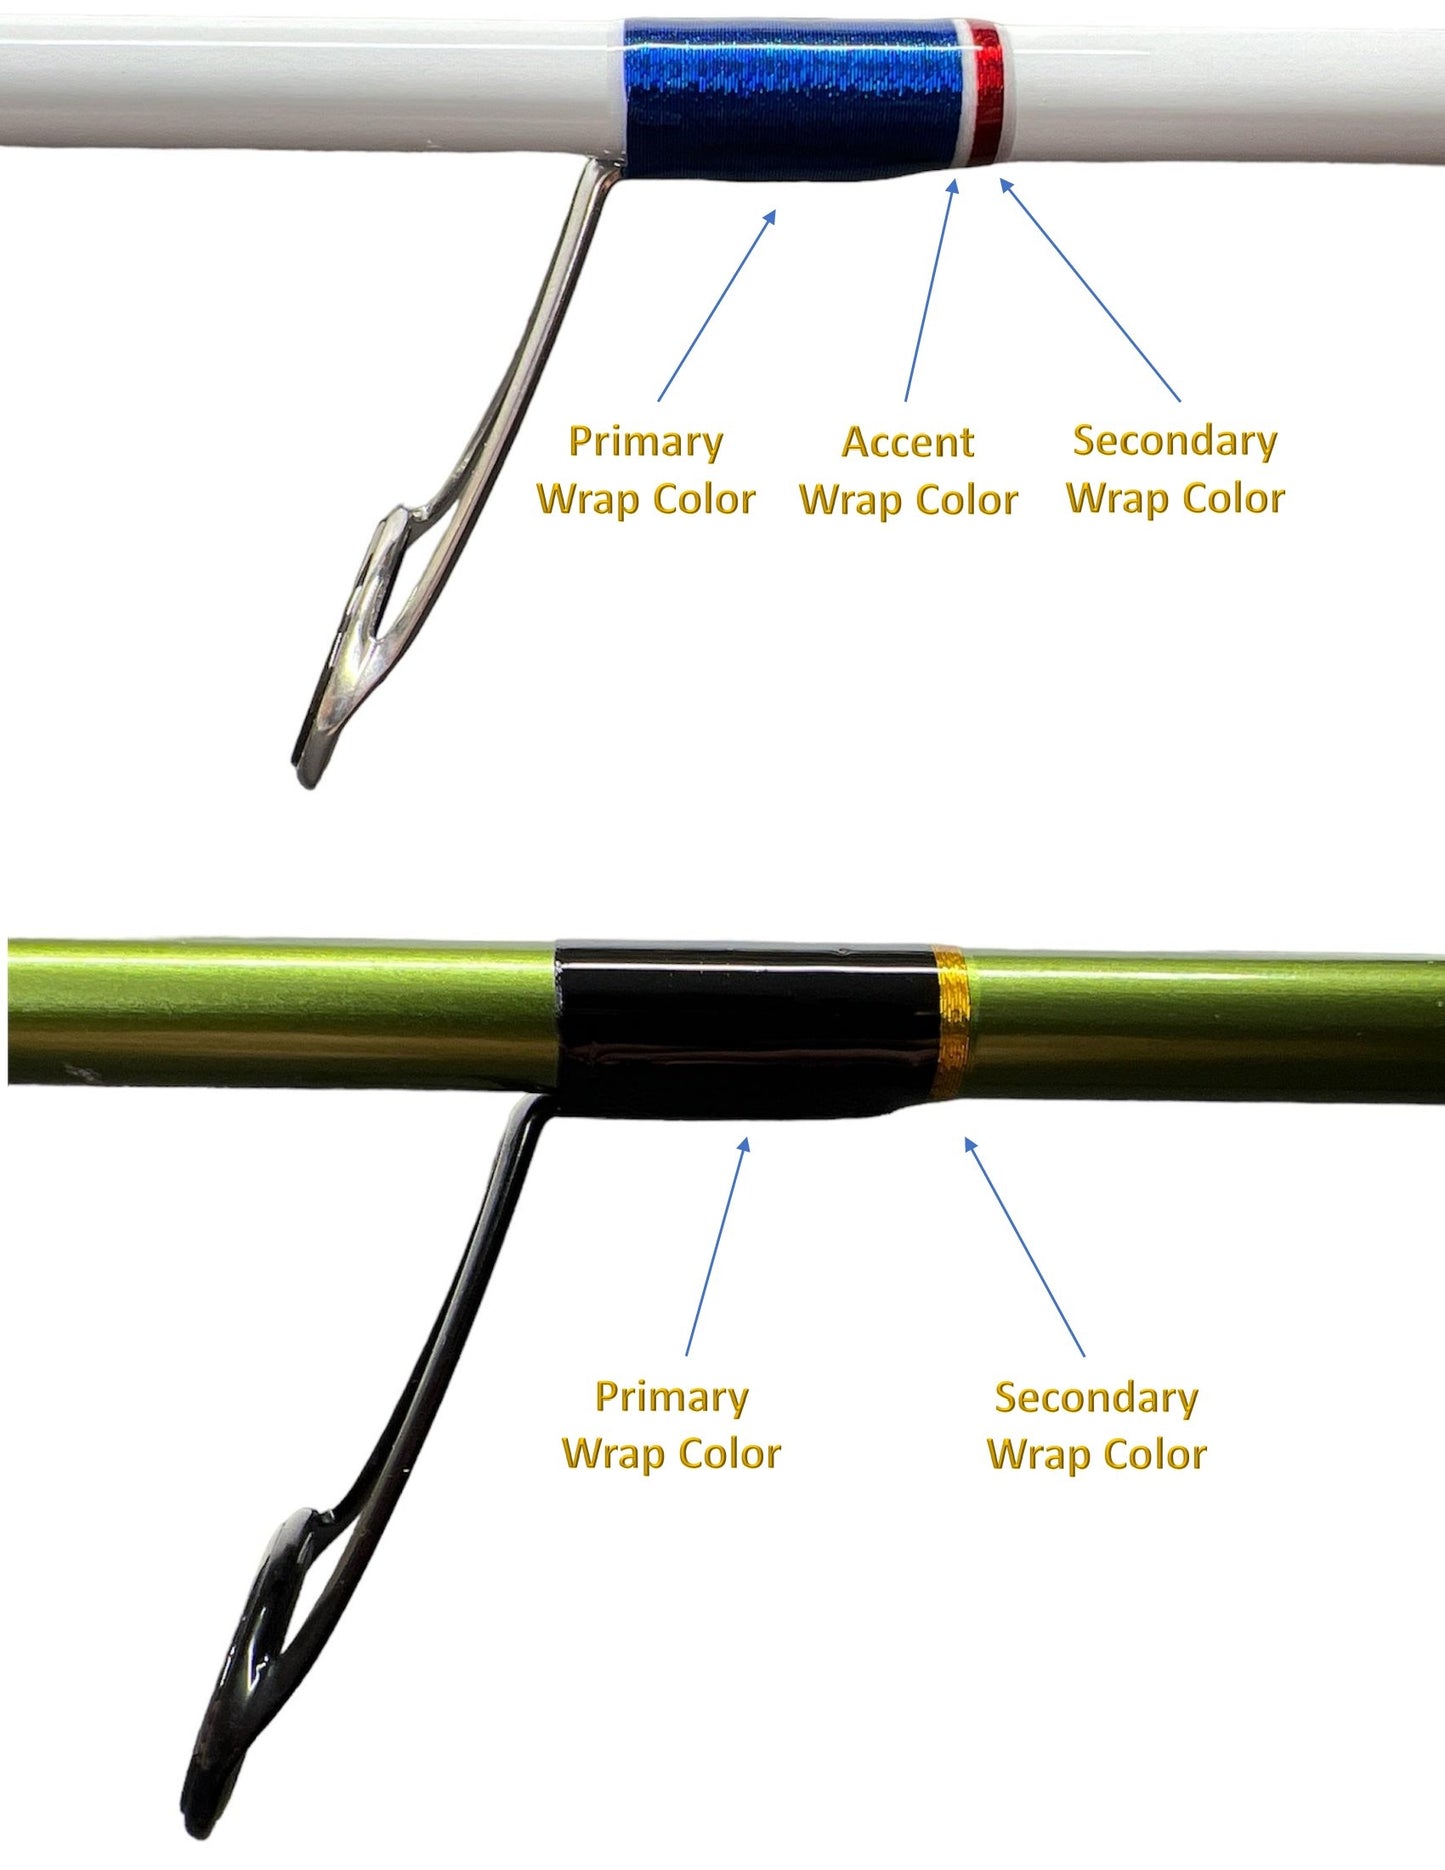 Custom Precision Strike Series Light Spinning Rod